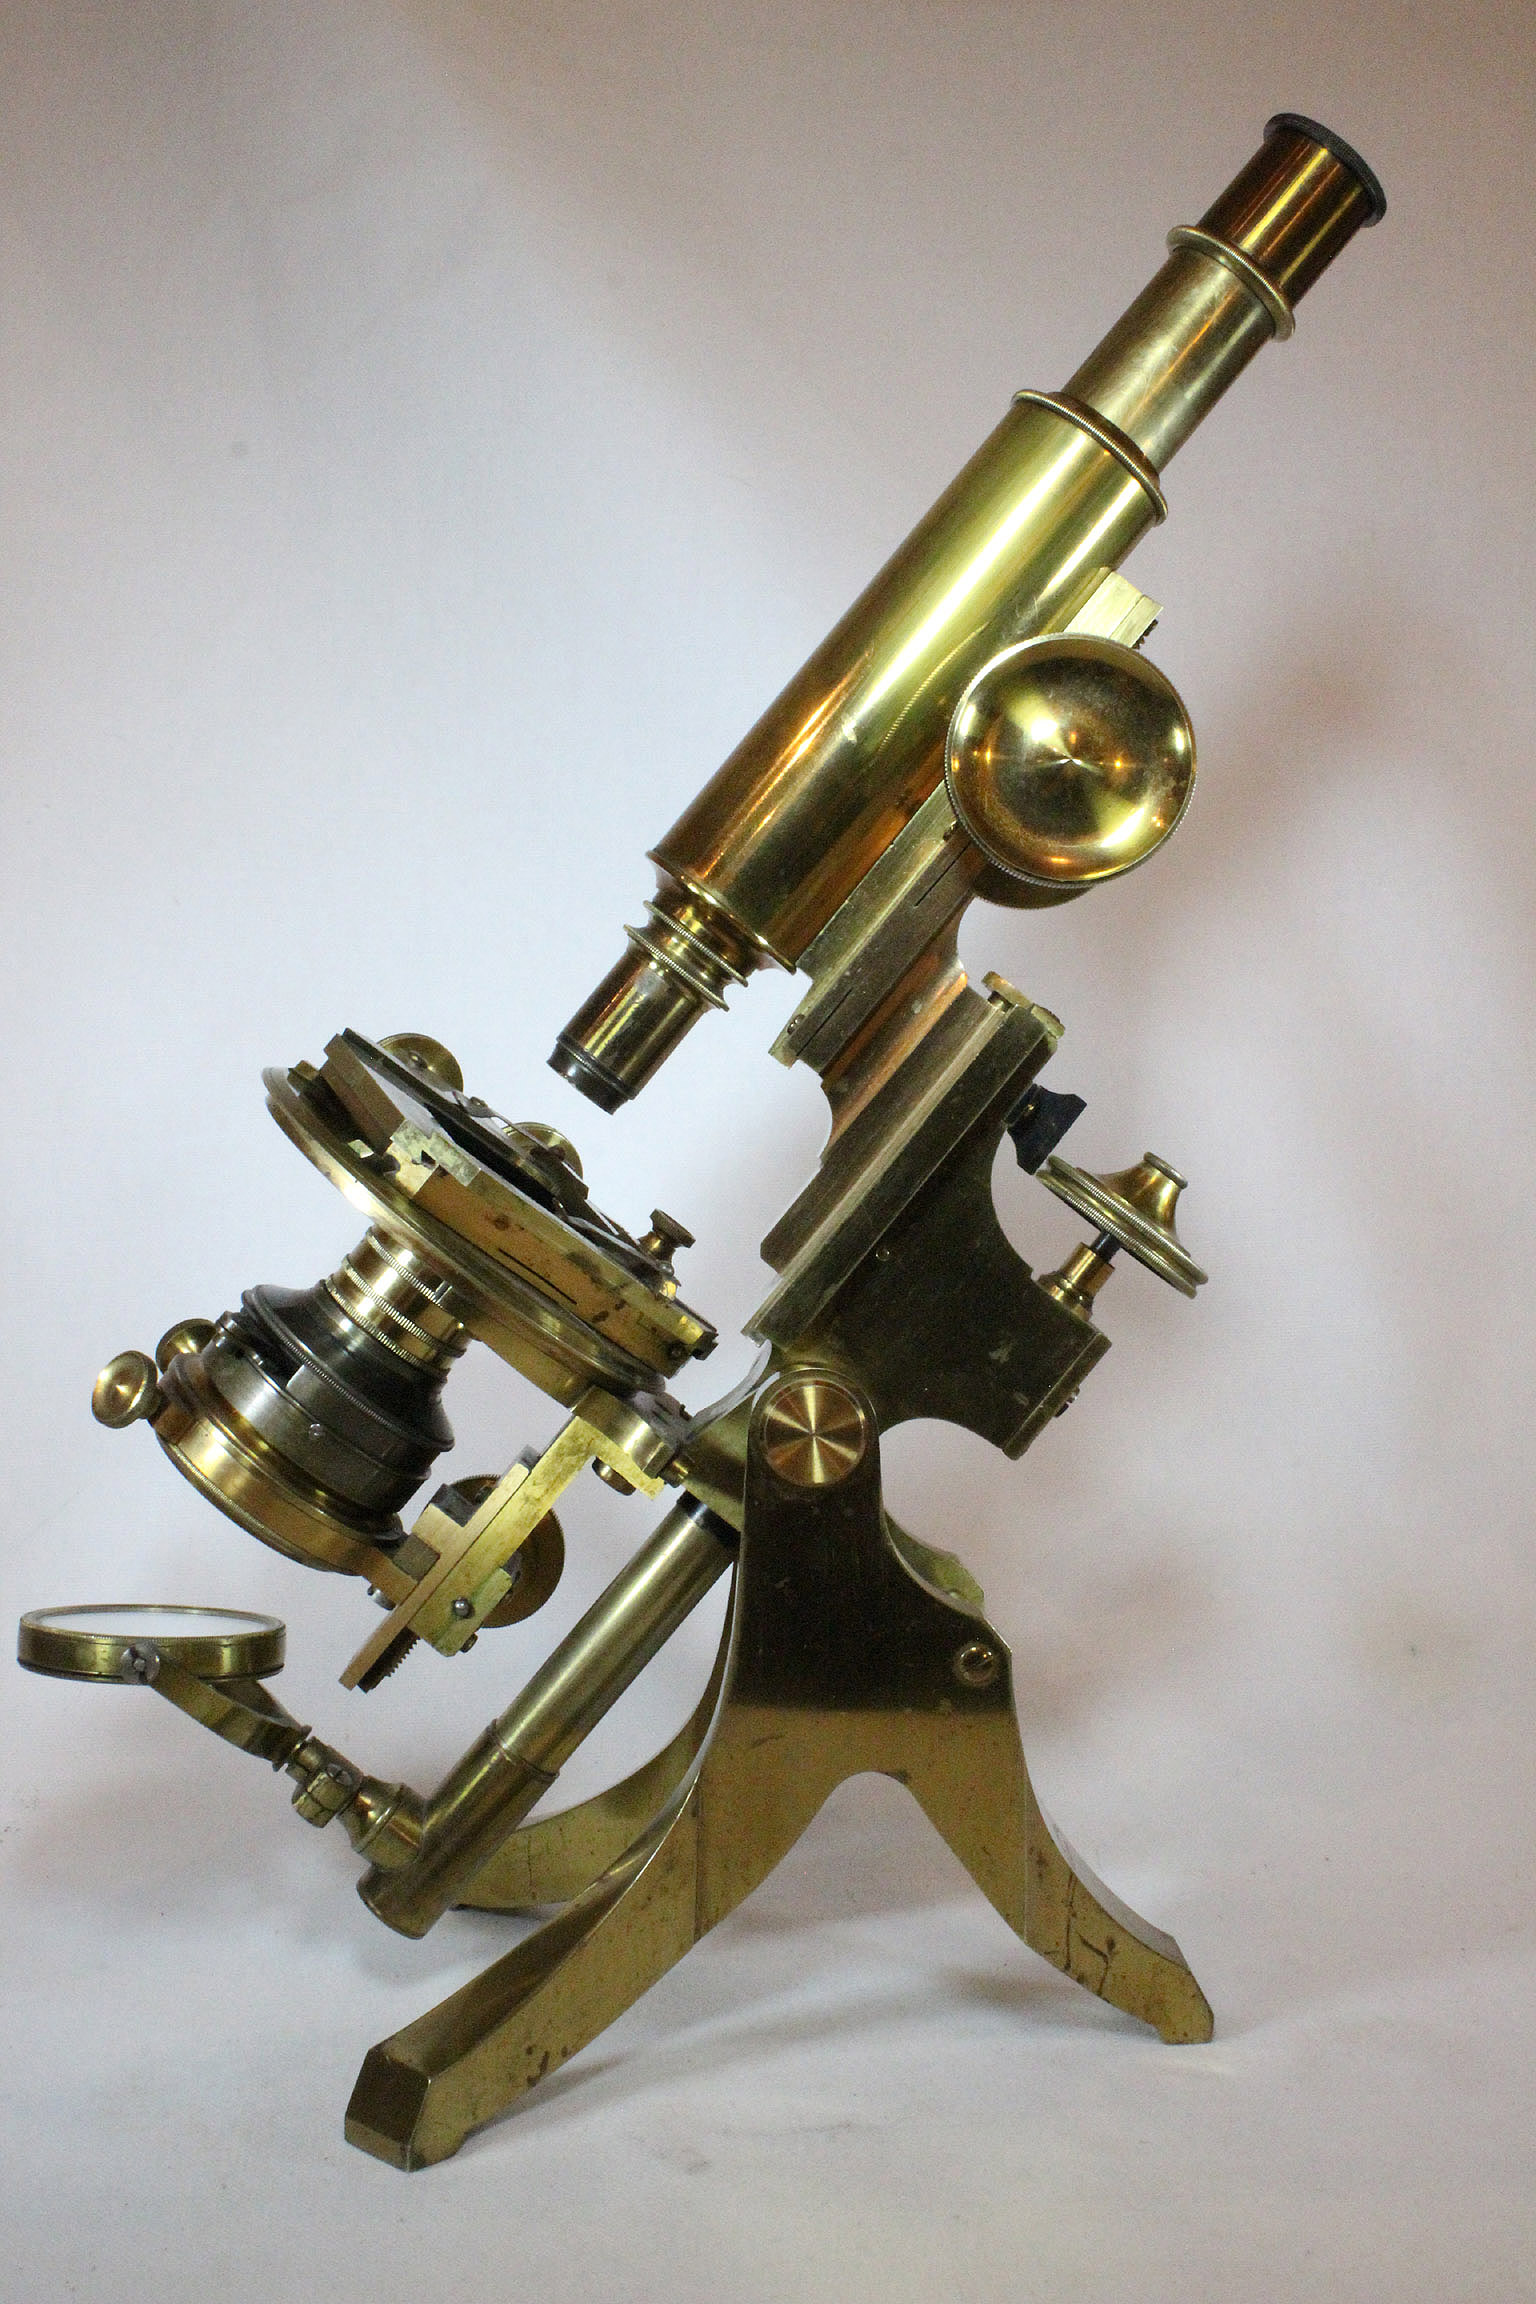 Fairservice microscope